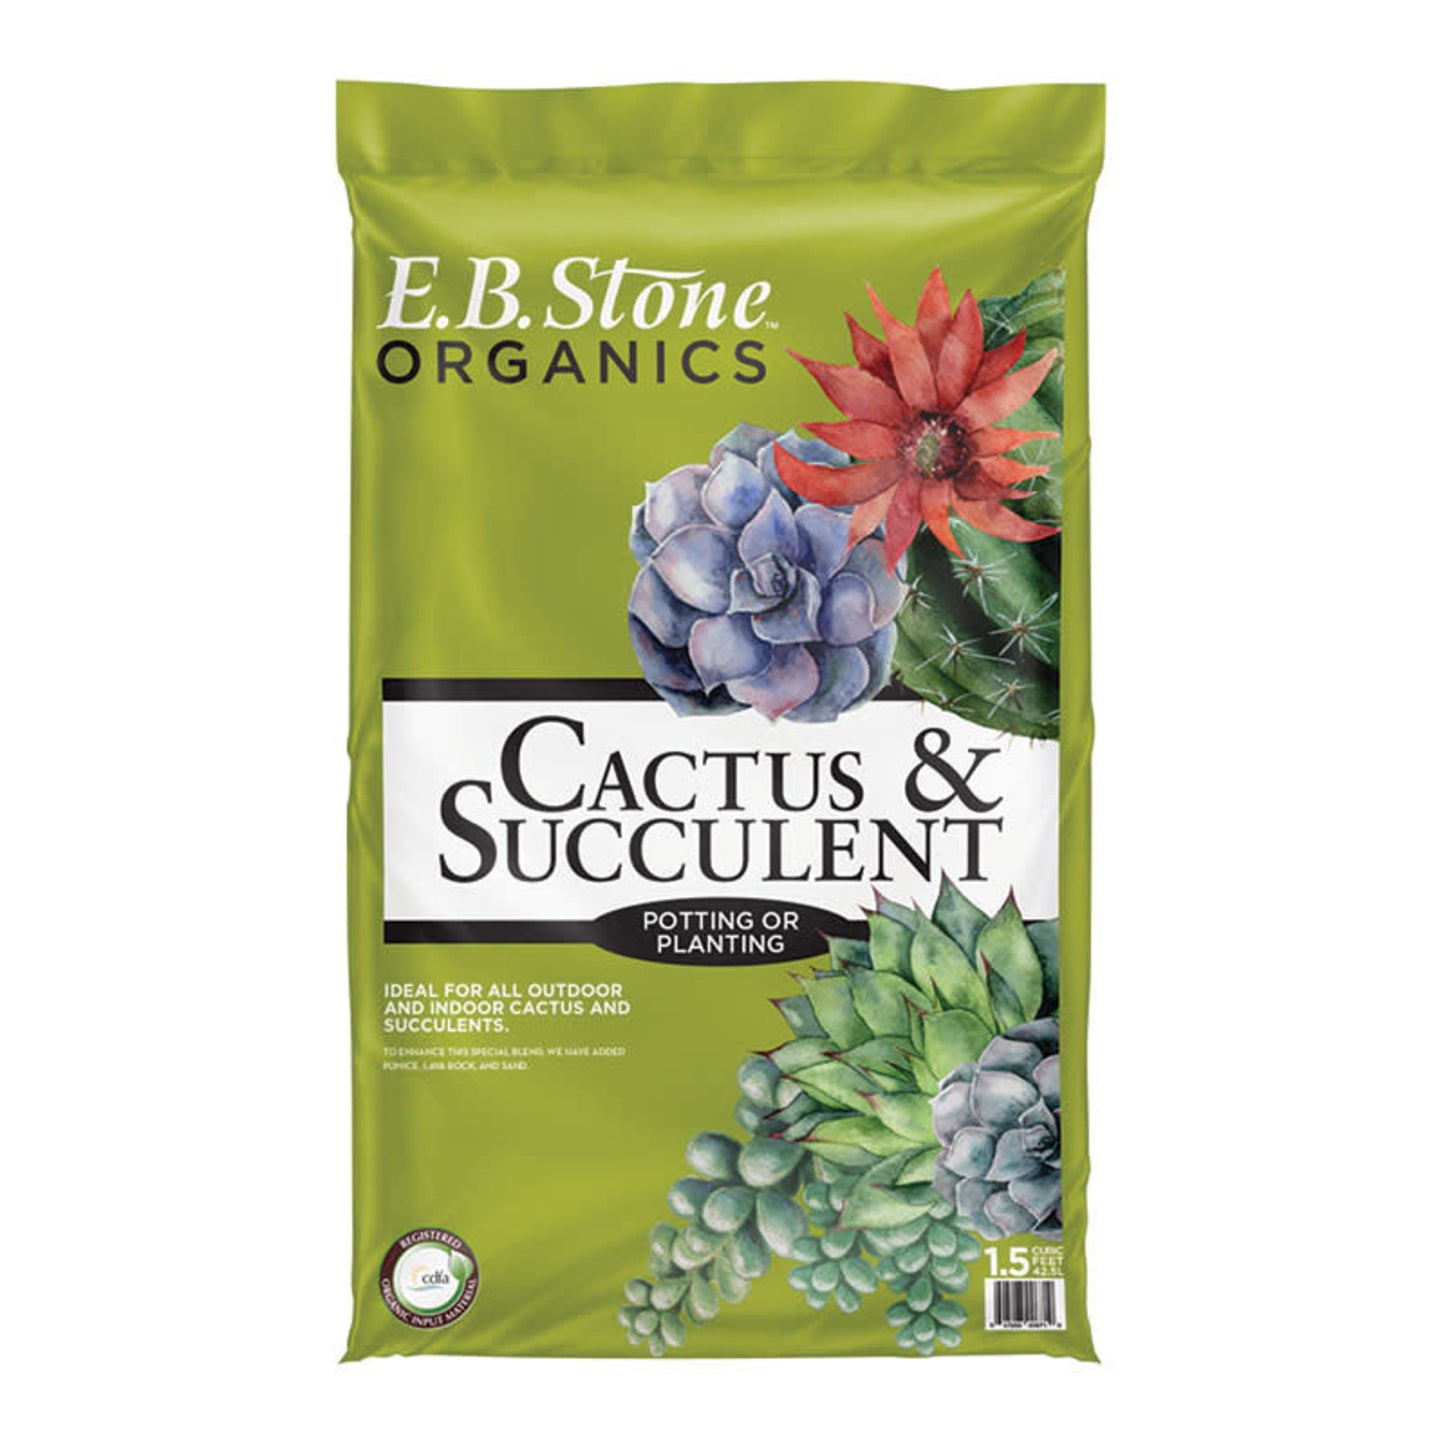 E.B. Stone Cactus & Succulent Potting Mix